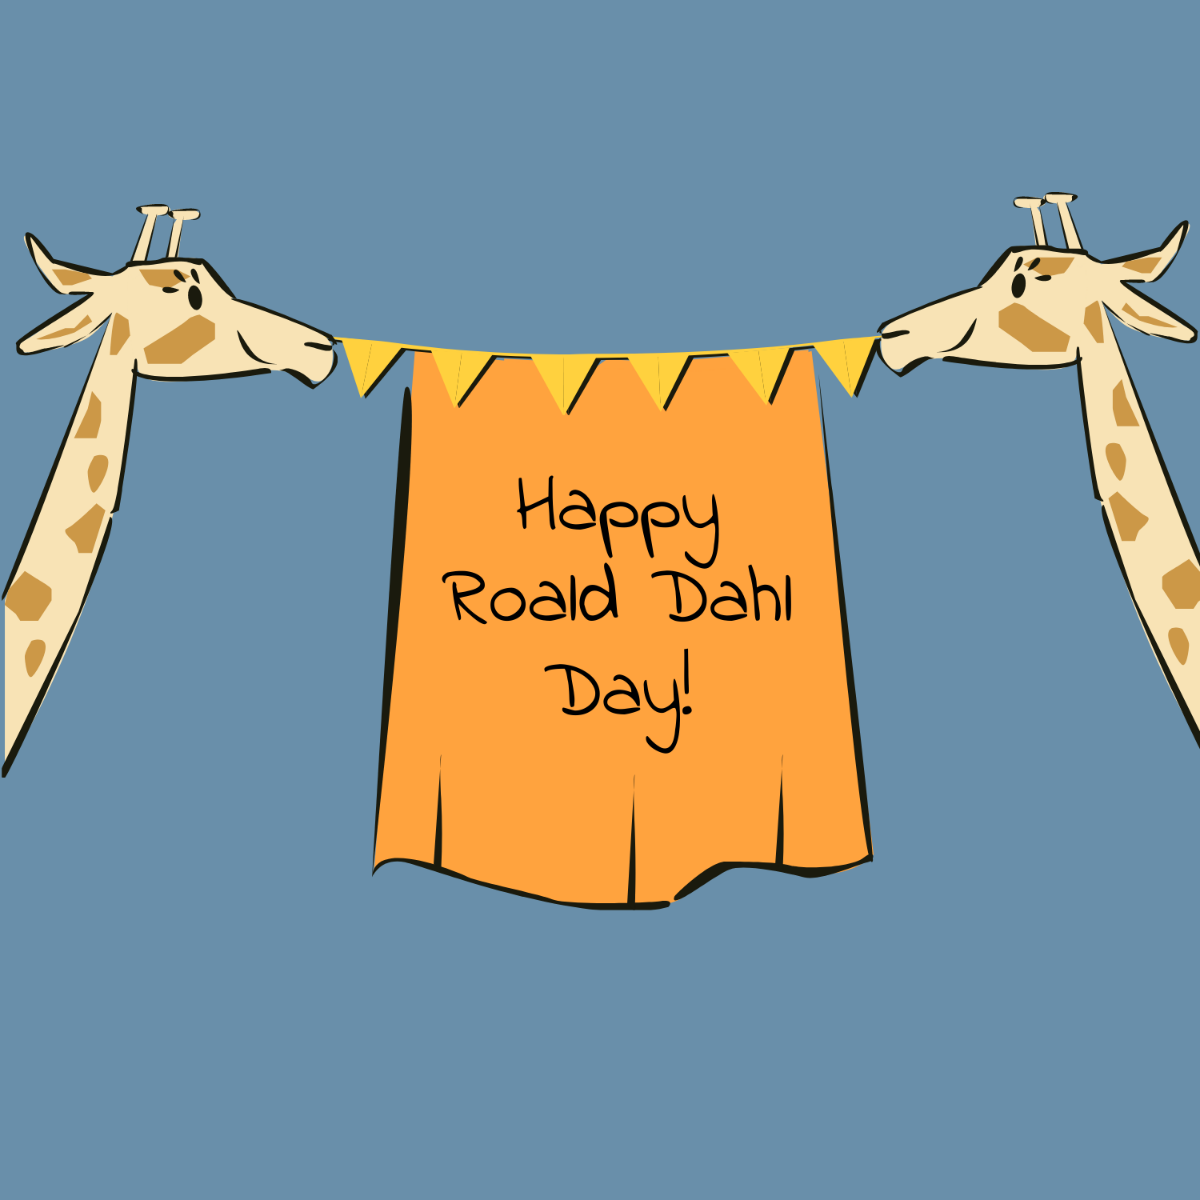 Roald Dahl Day Cartoon Vector